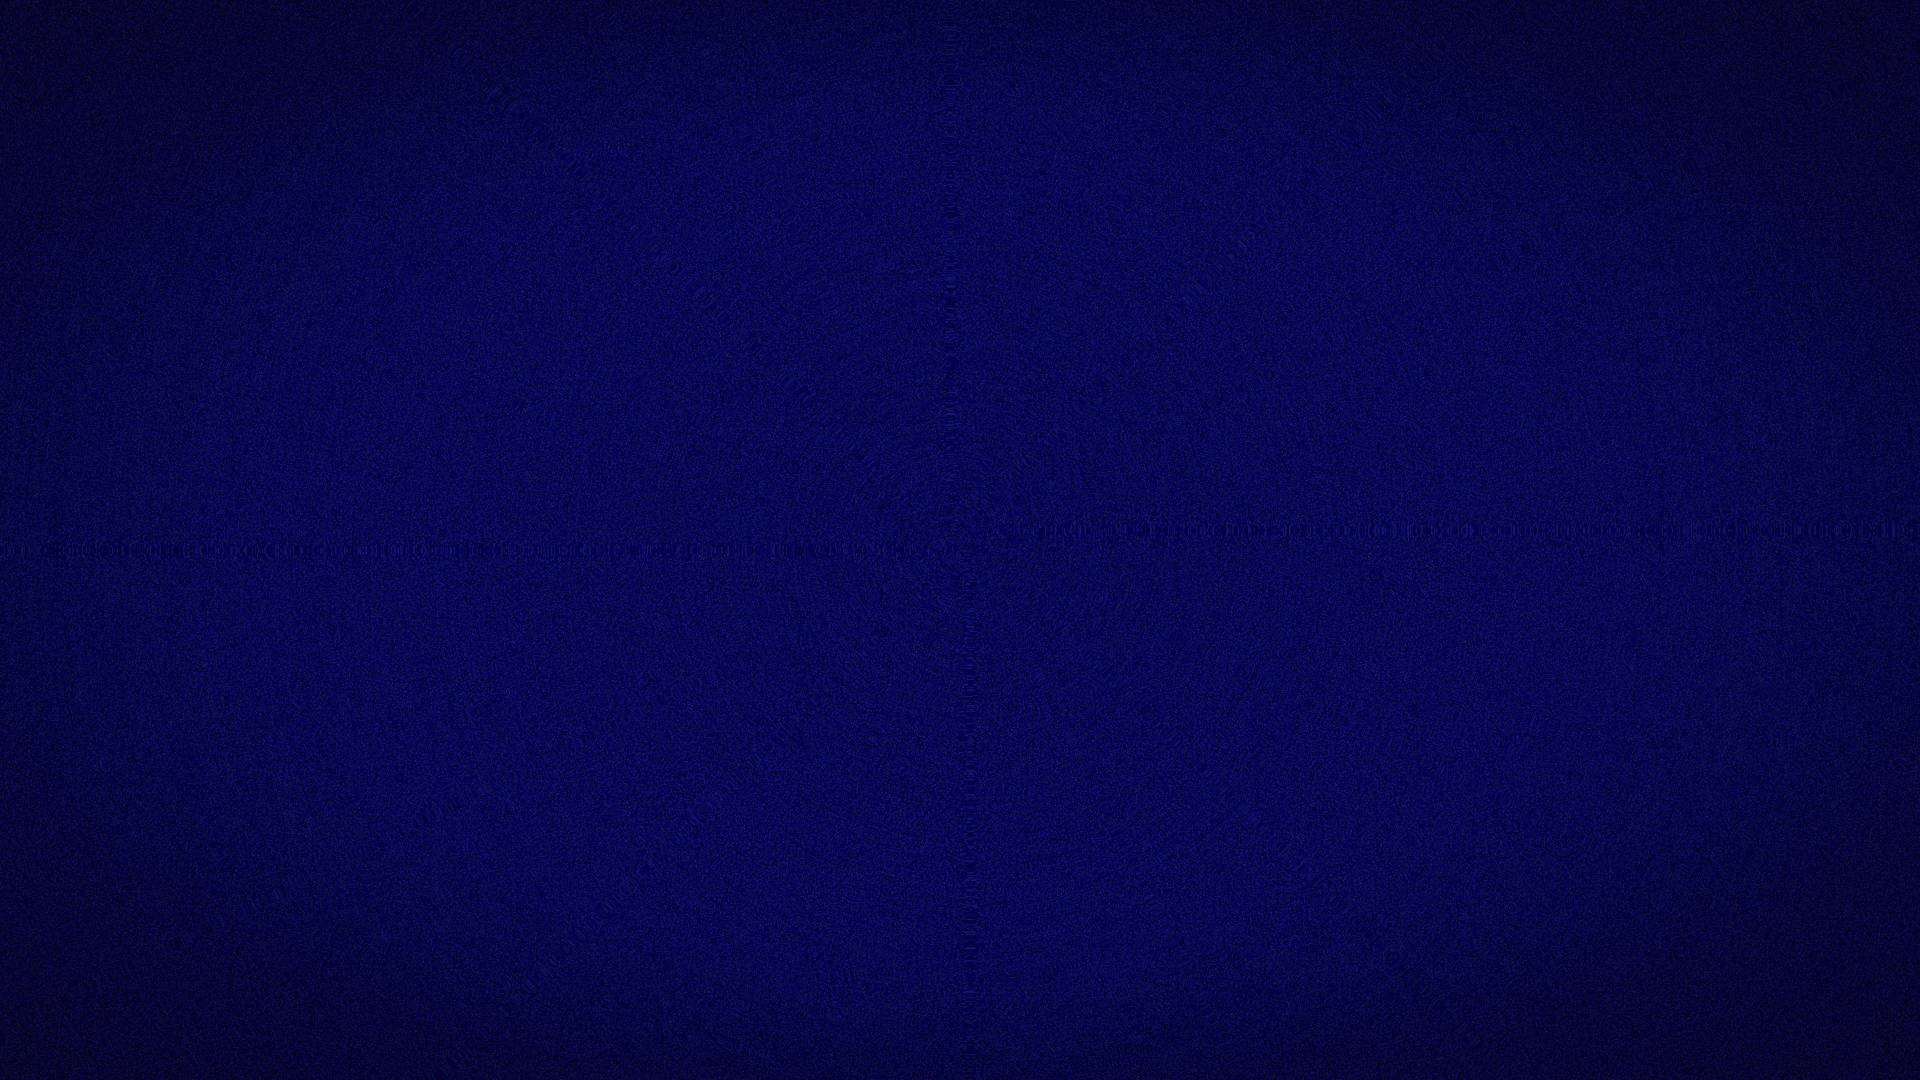 Black And Blue Background Design  Dark Blue Christmas Background   1250x800 Wallpaper  teahubio